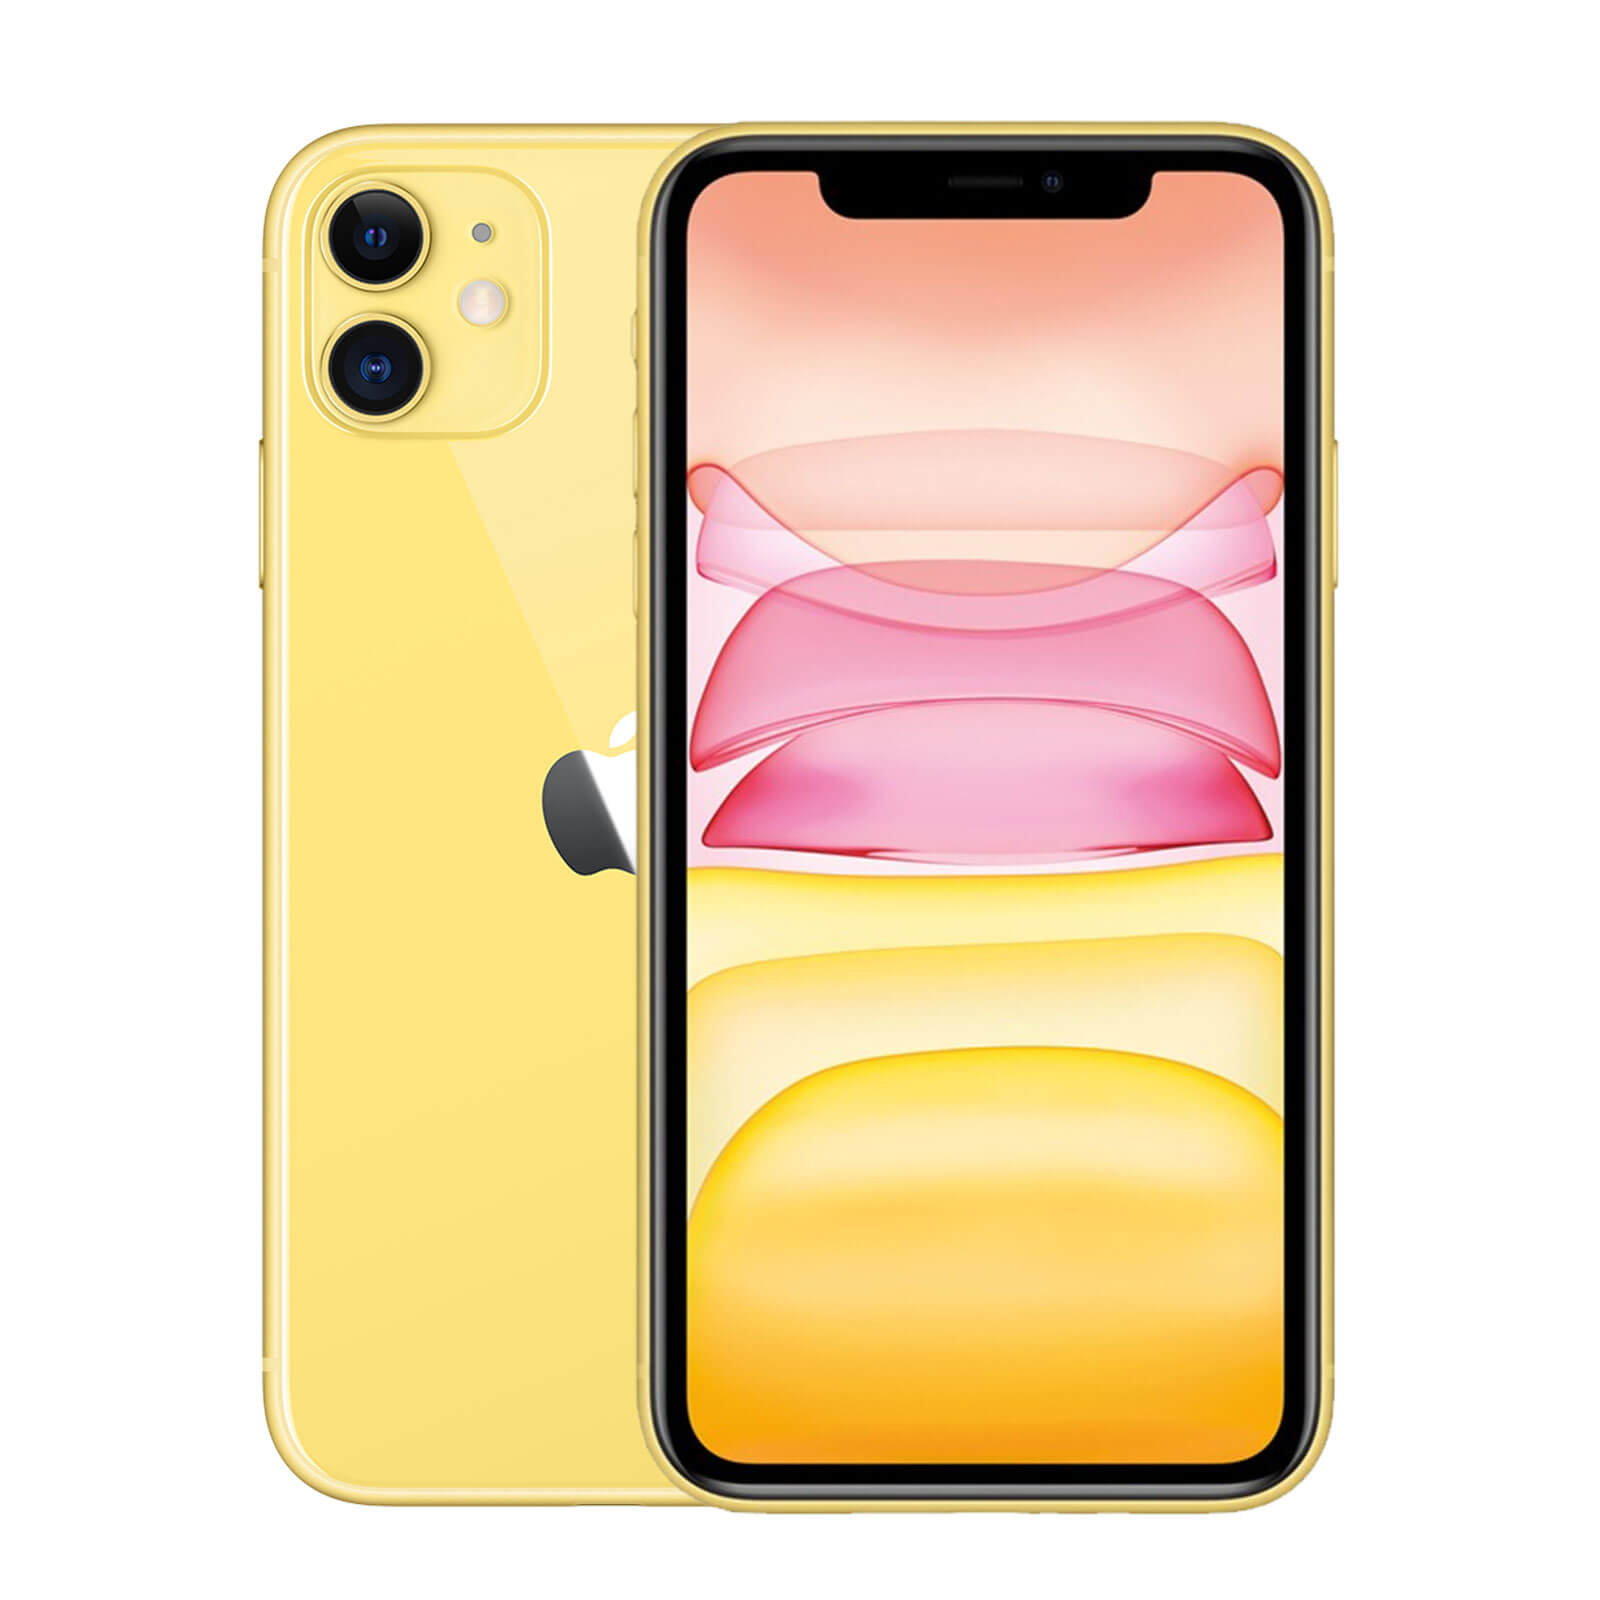 Apple iPhone 11 128GB Yellow Very Good - Unlocked